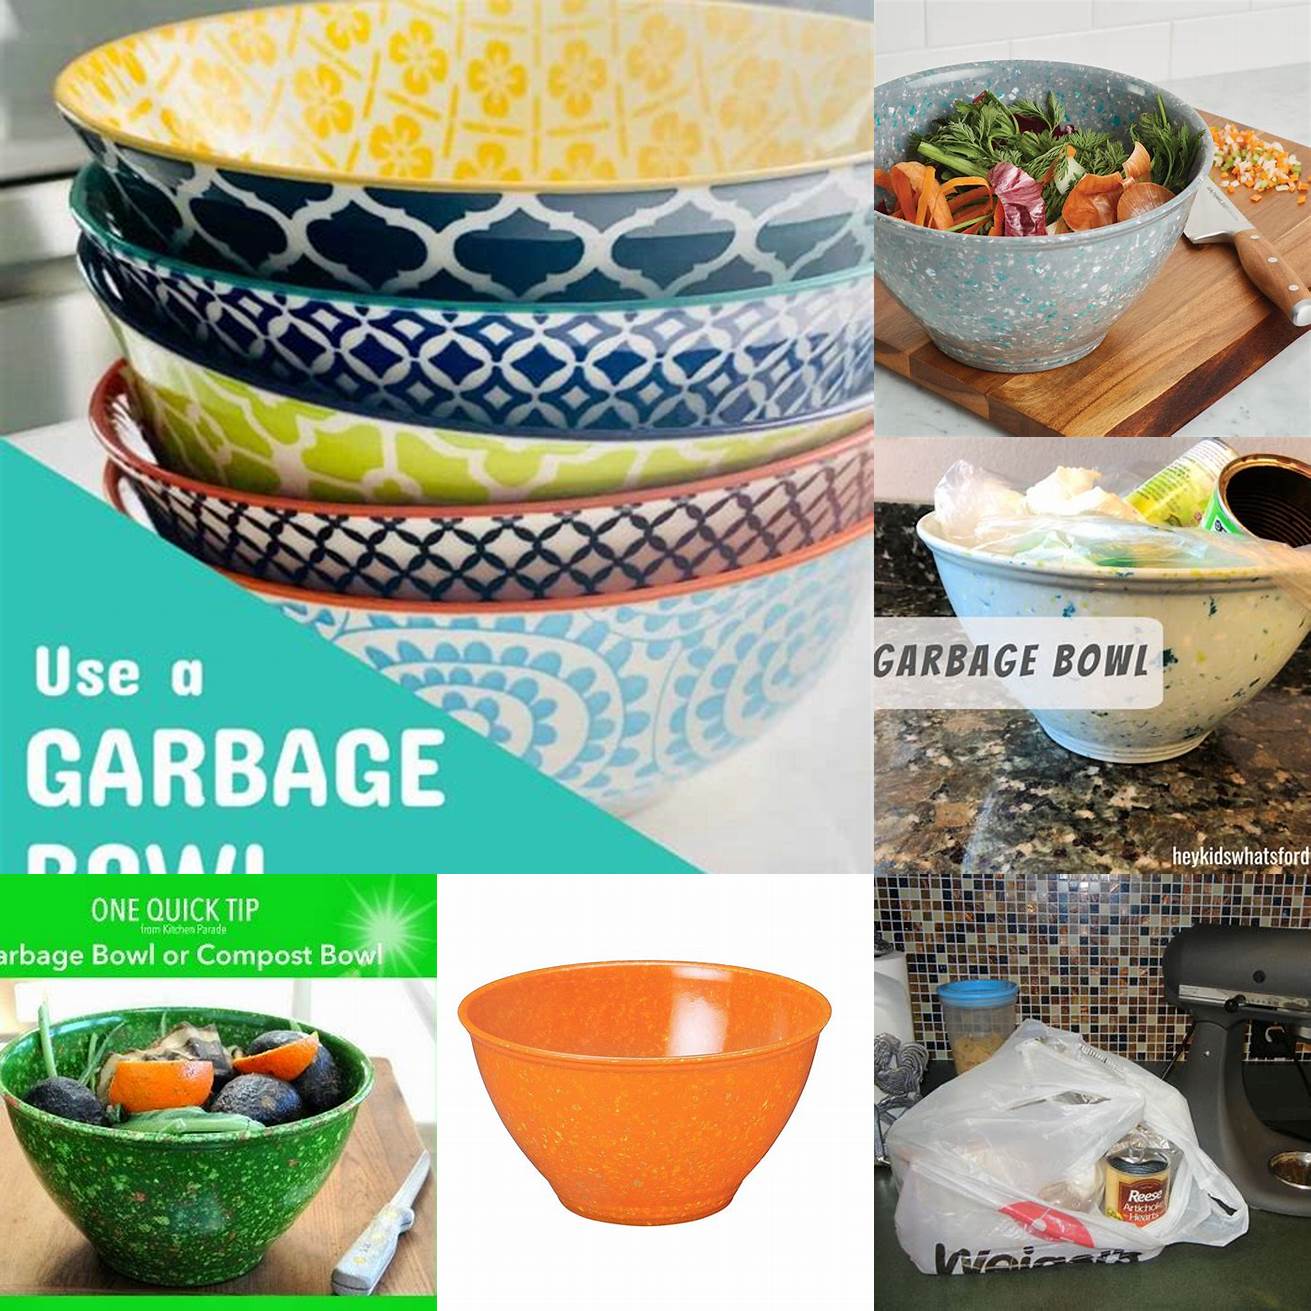 Use a garbage bowl